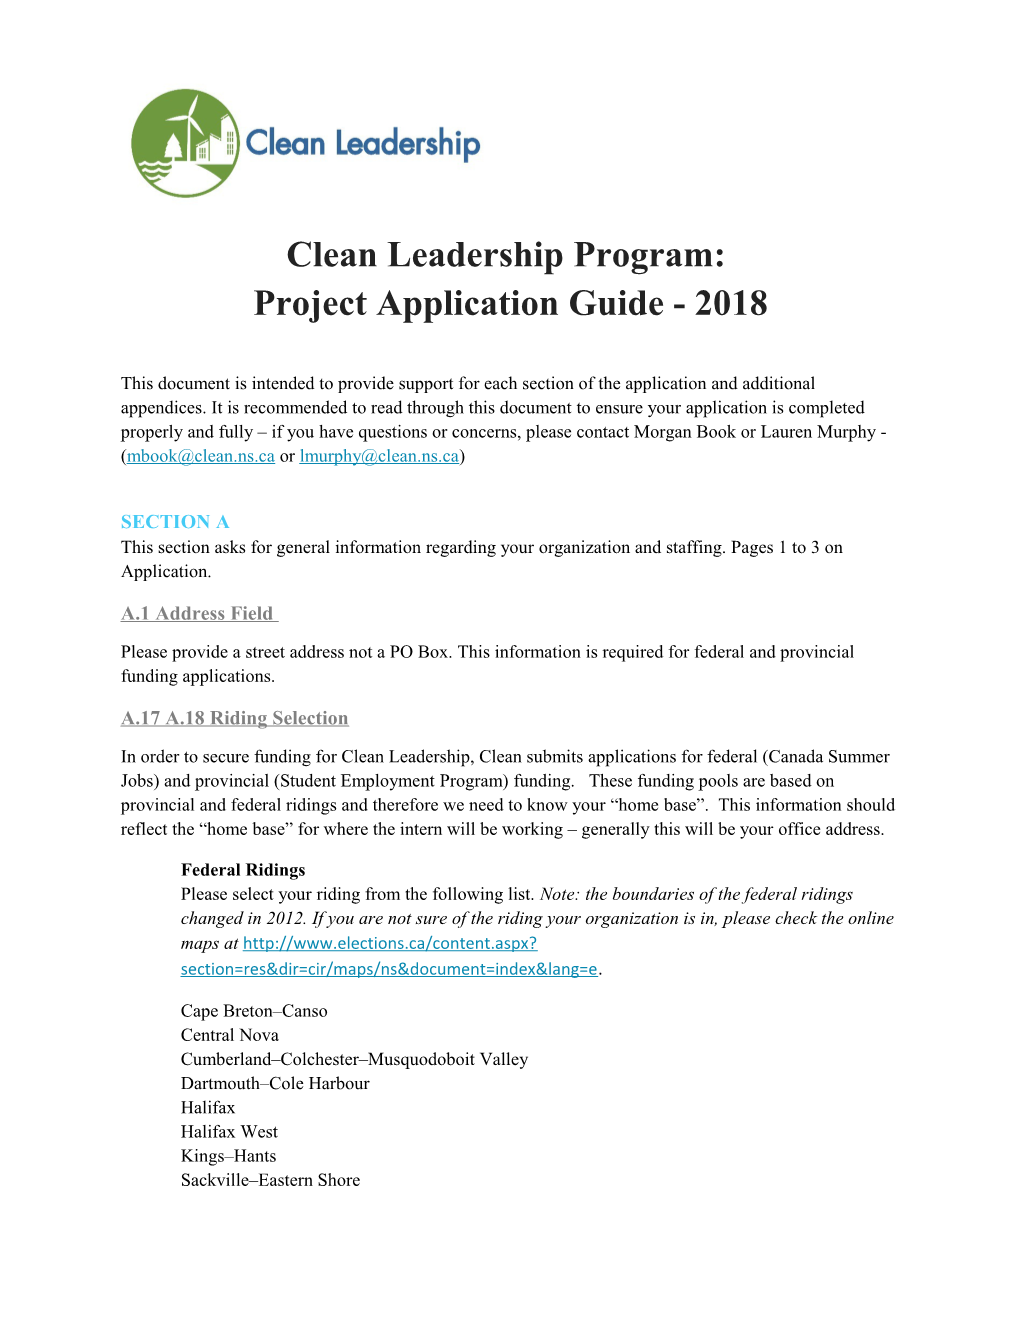 Clean Leadershipprogram